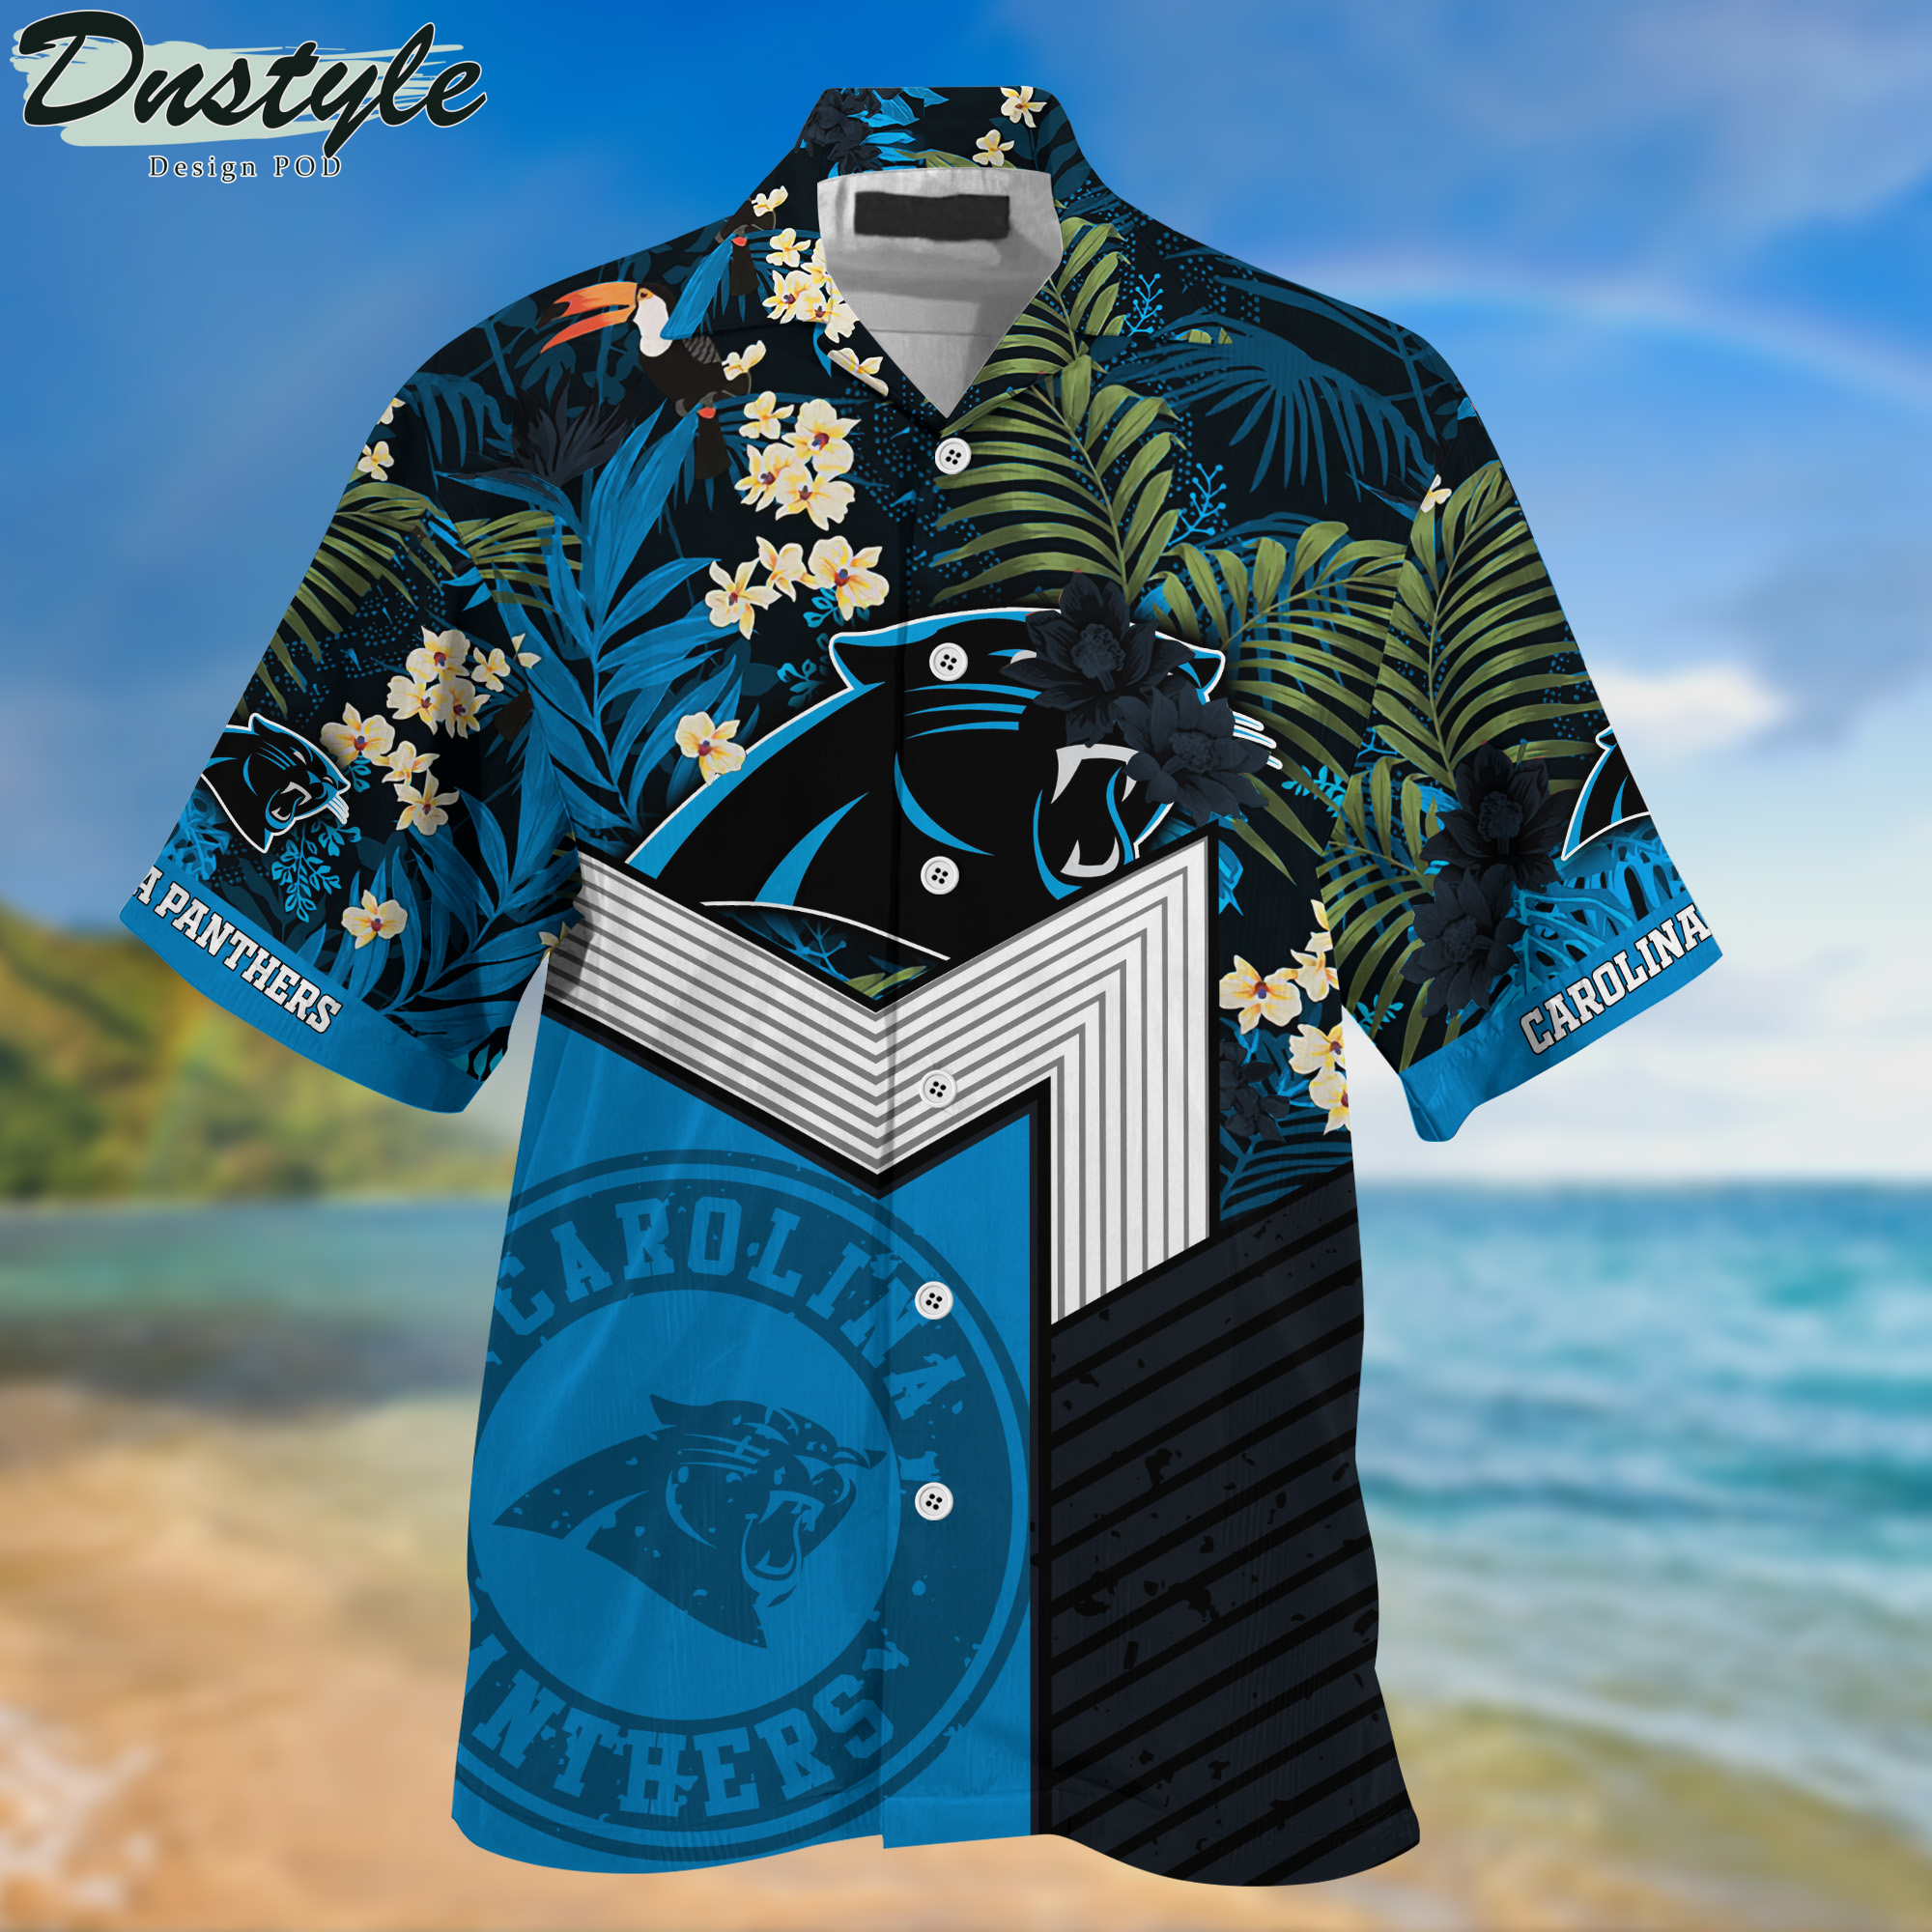 Carolina Panthers Hawaii Shirt And Shorts New Collection